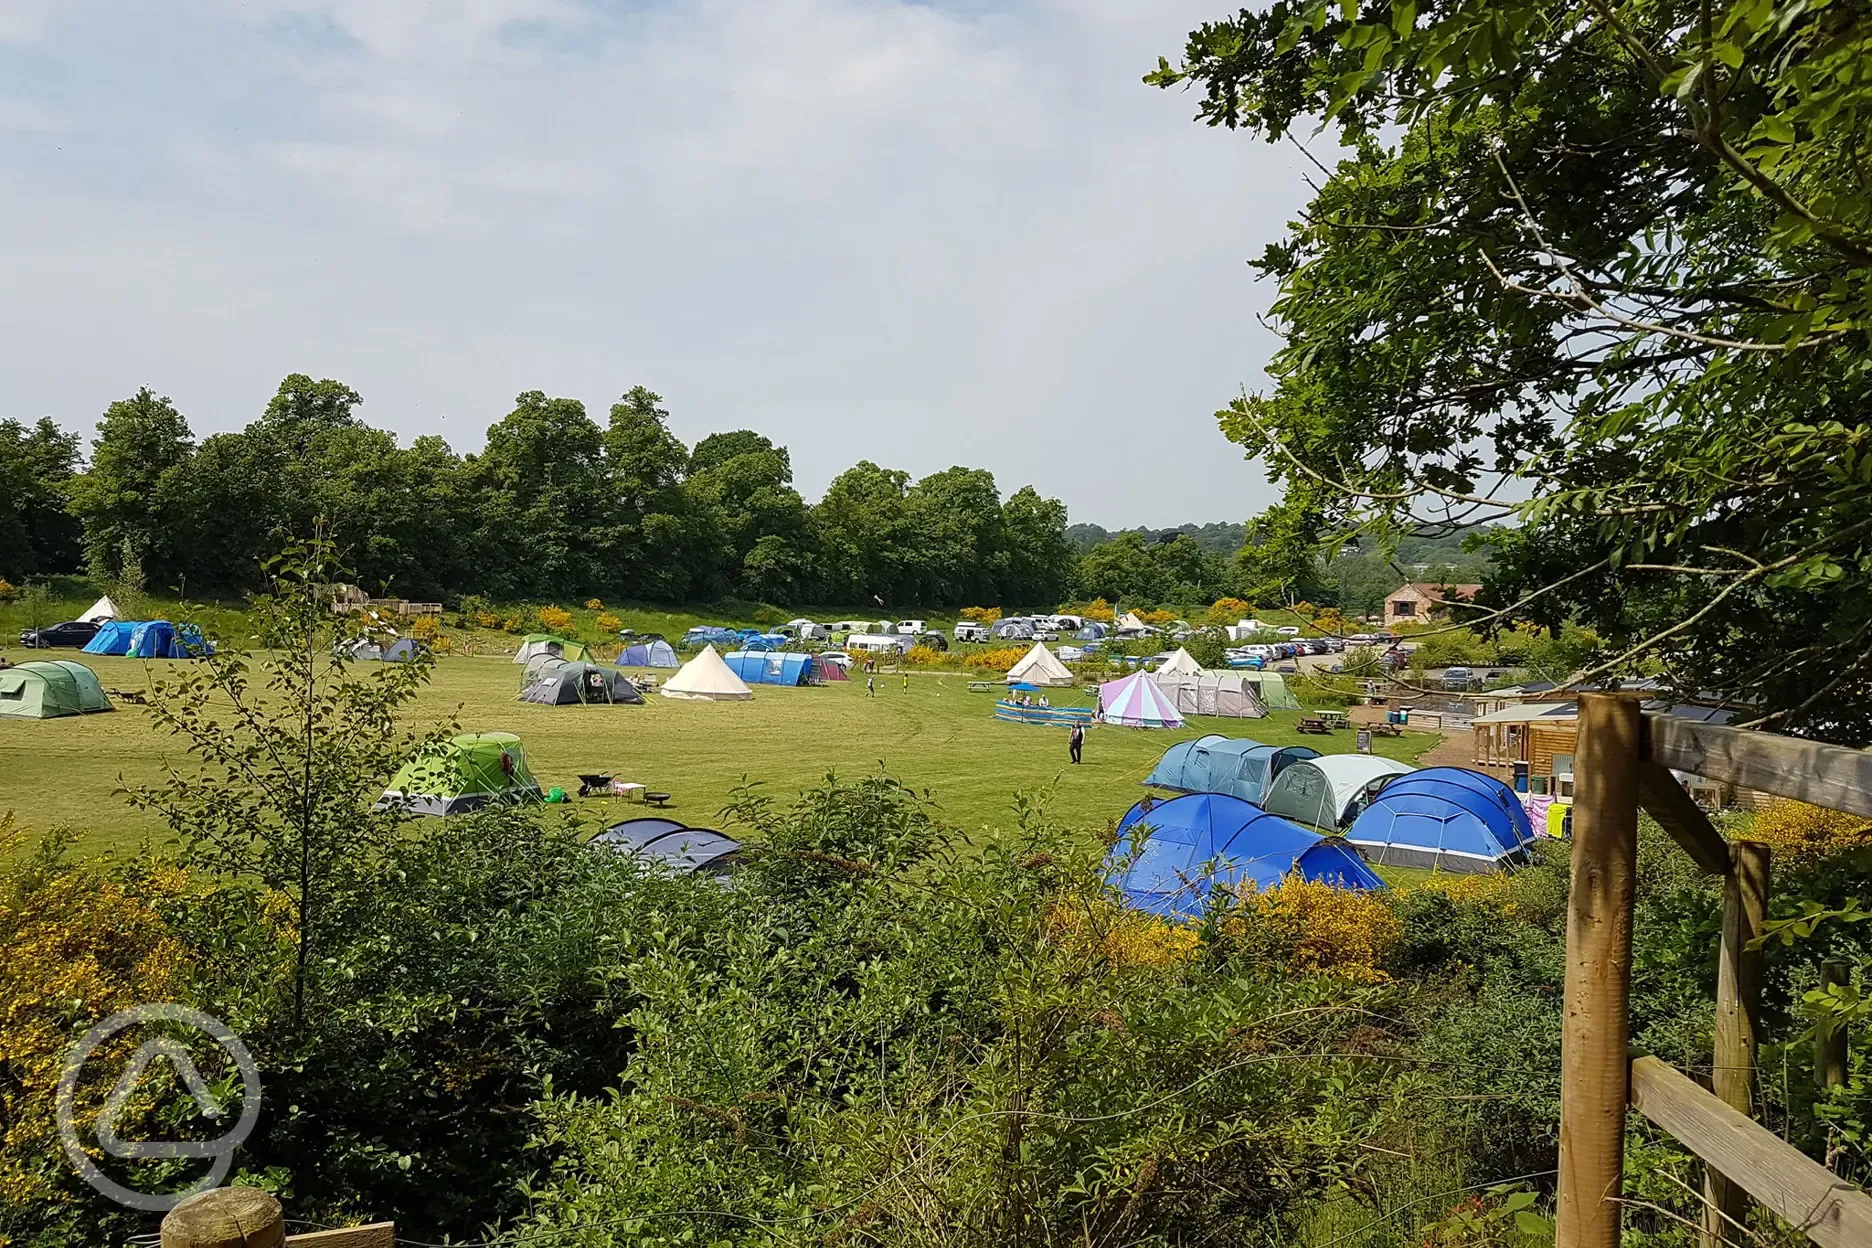 The campsite setting